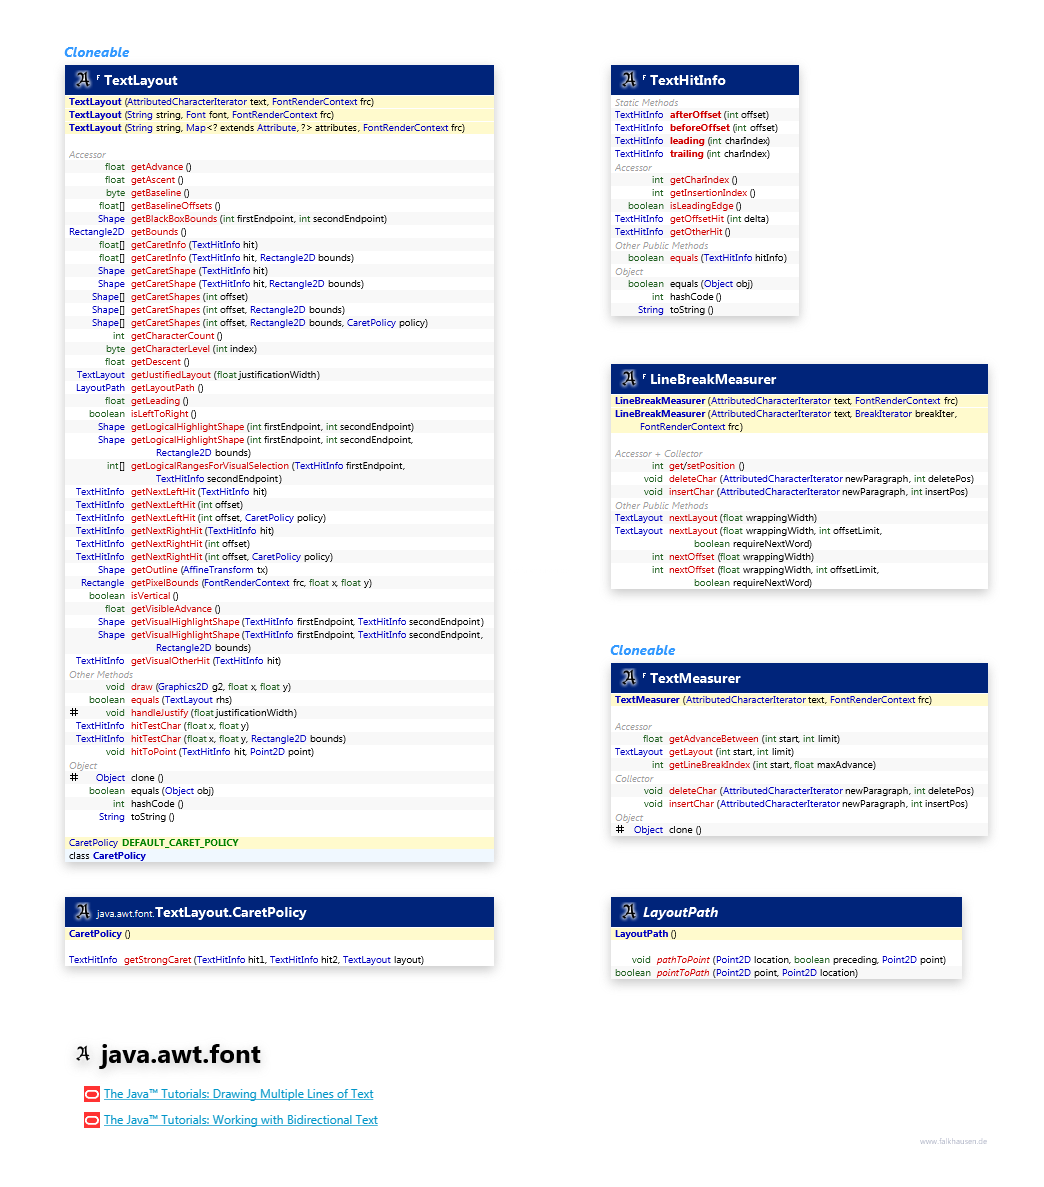 java.awt.font TextLayout class diagram and api documentation for Java 7